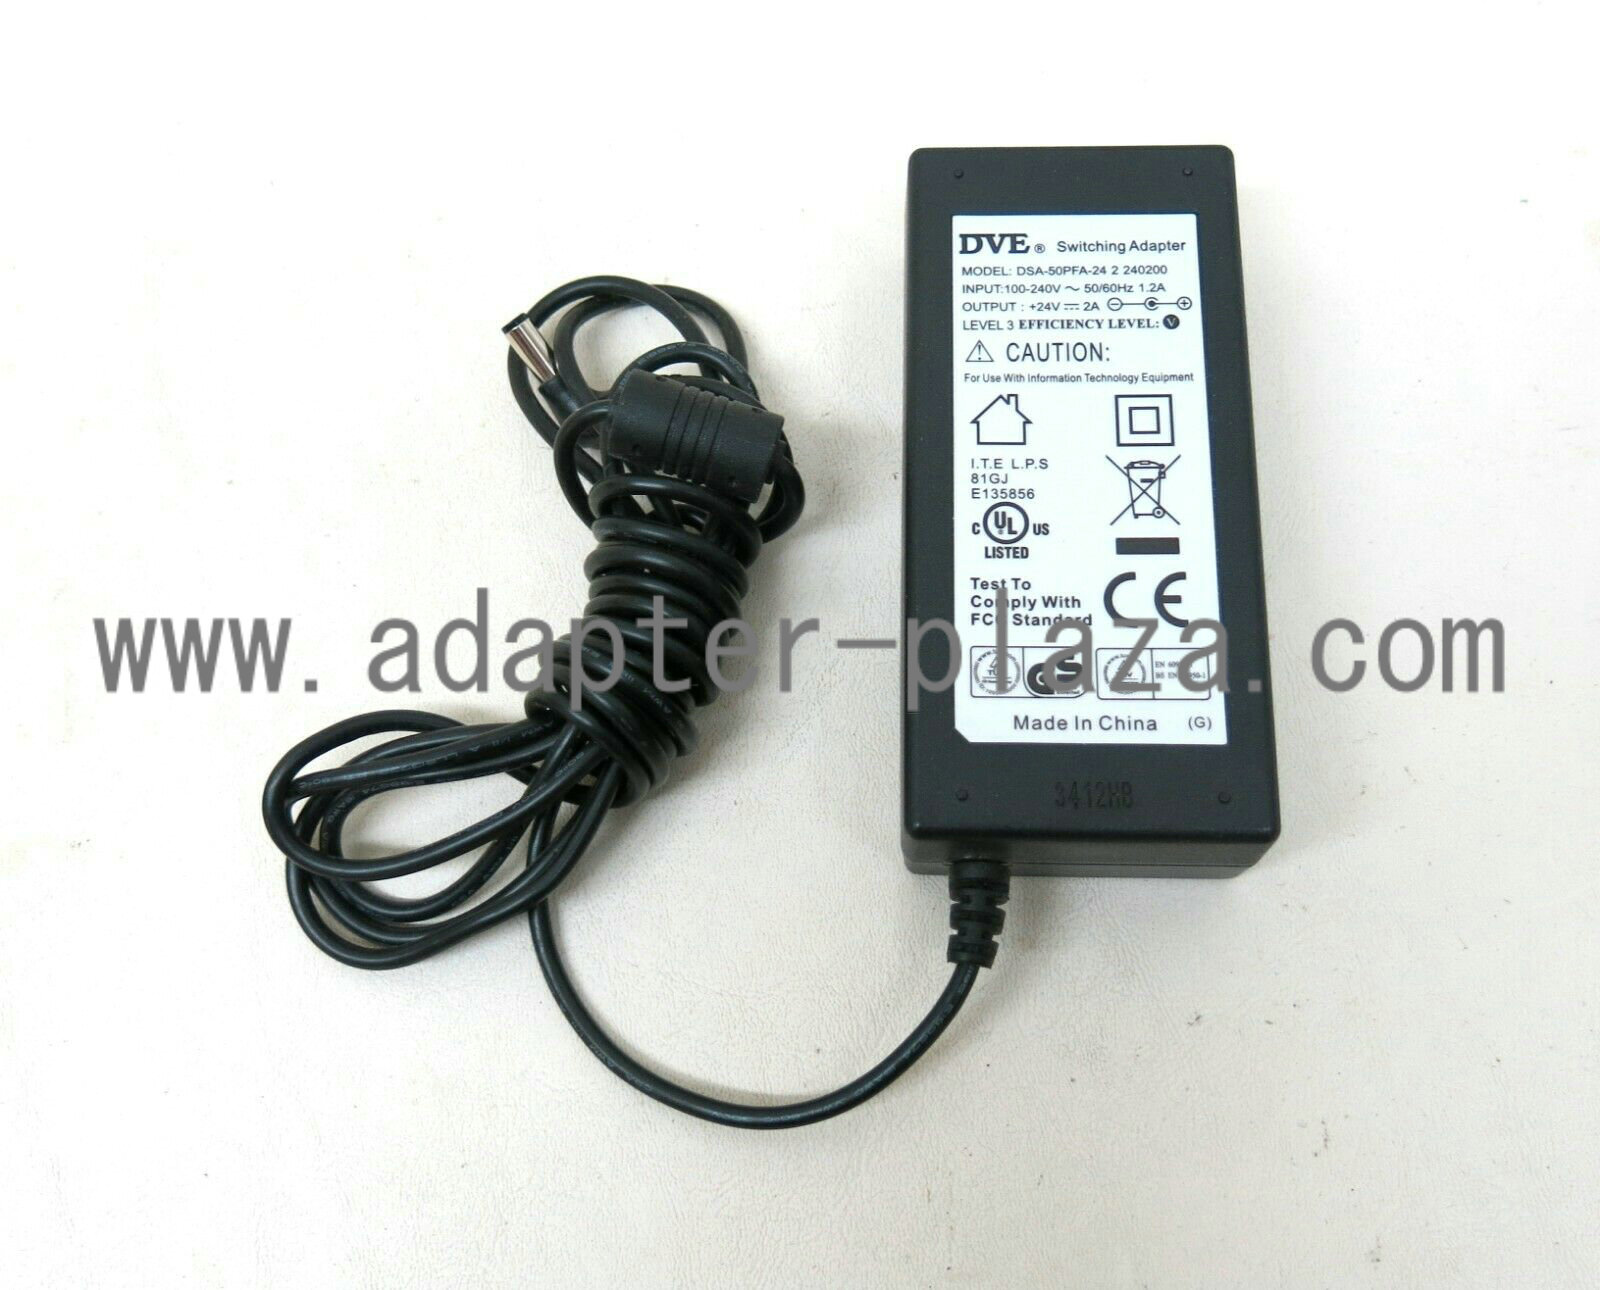 Genuine DVE DSA-50PFA-24 2 240200 Power Supply 24V 2A Authentic ac adapter - Click Image to Close